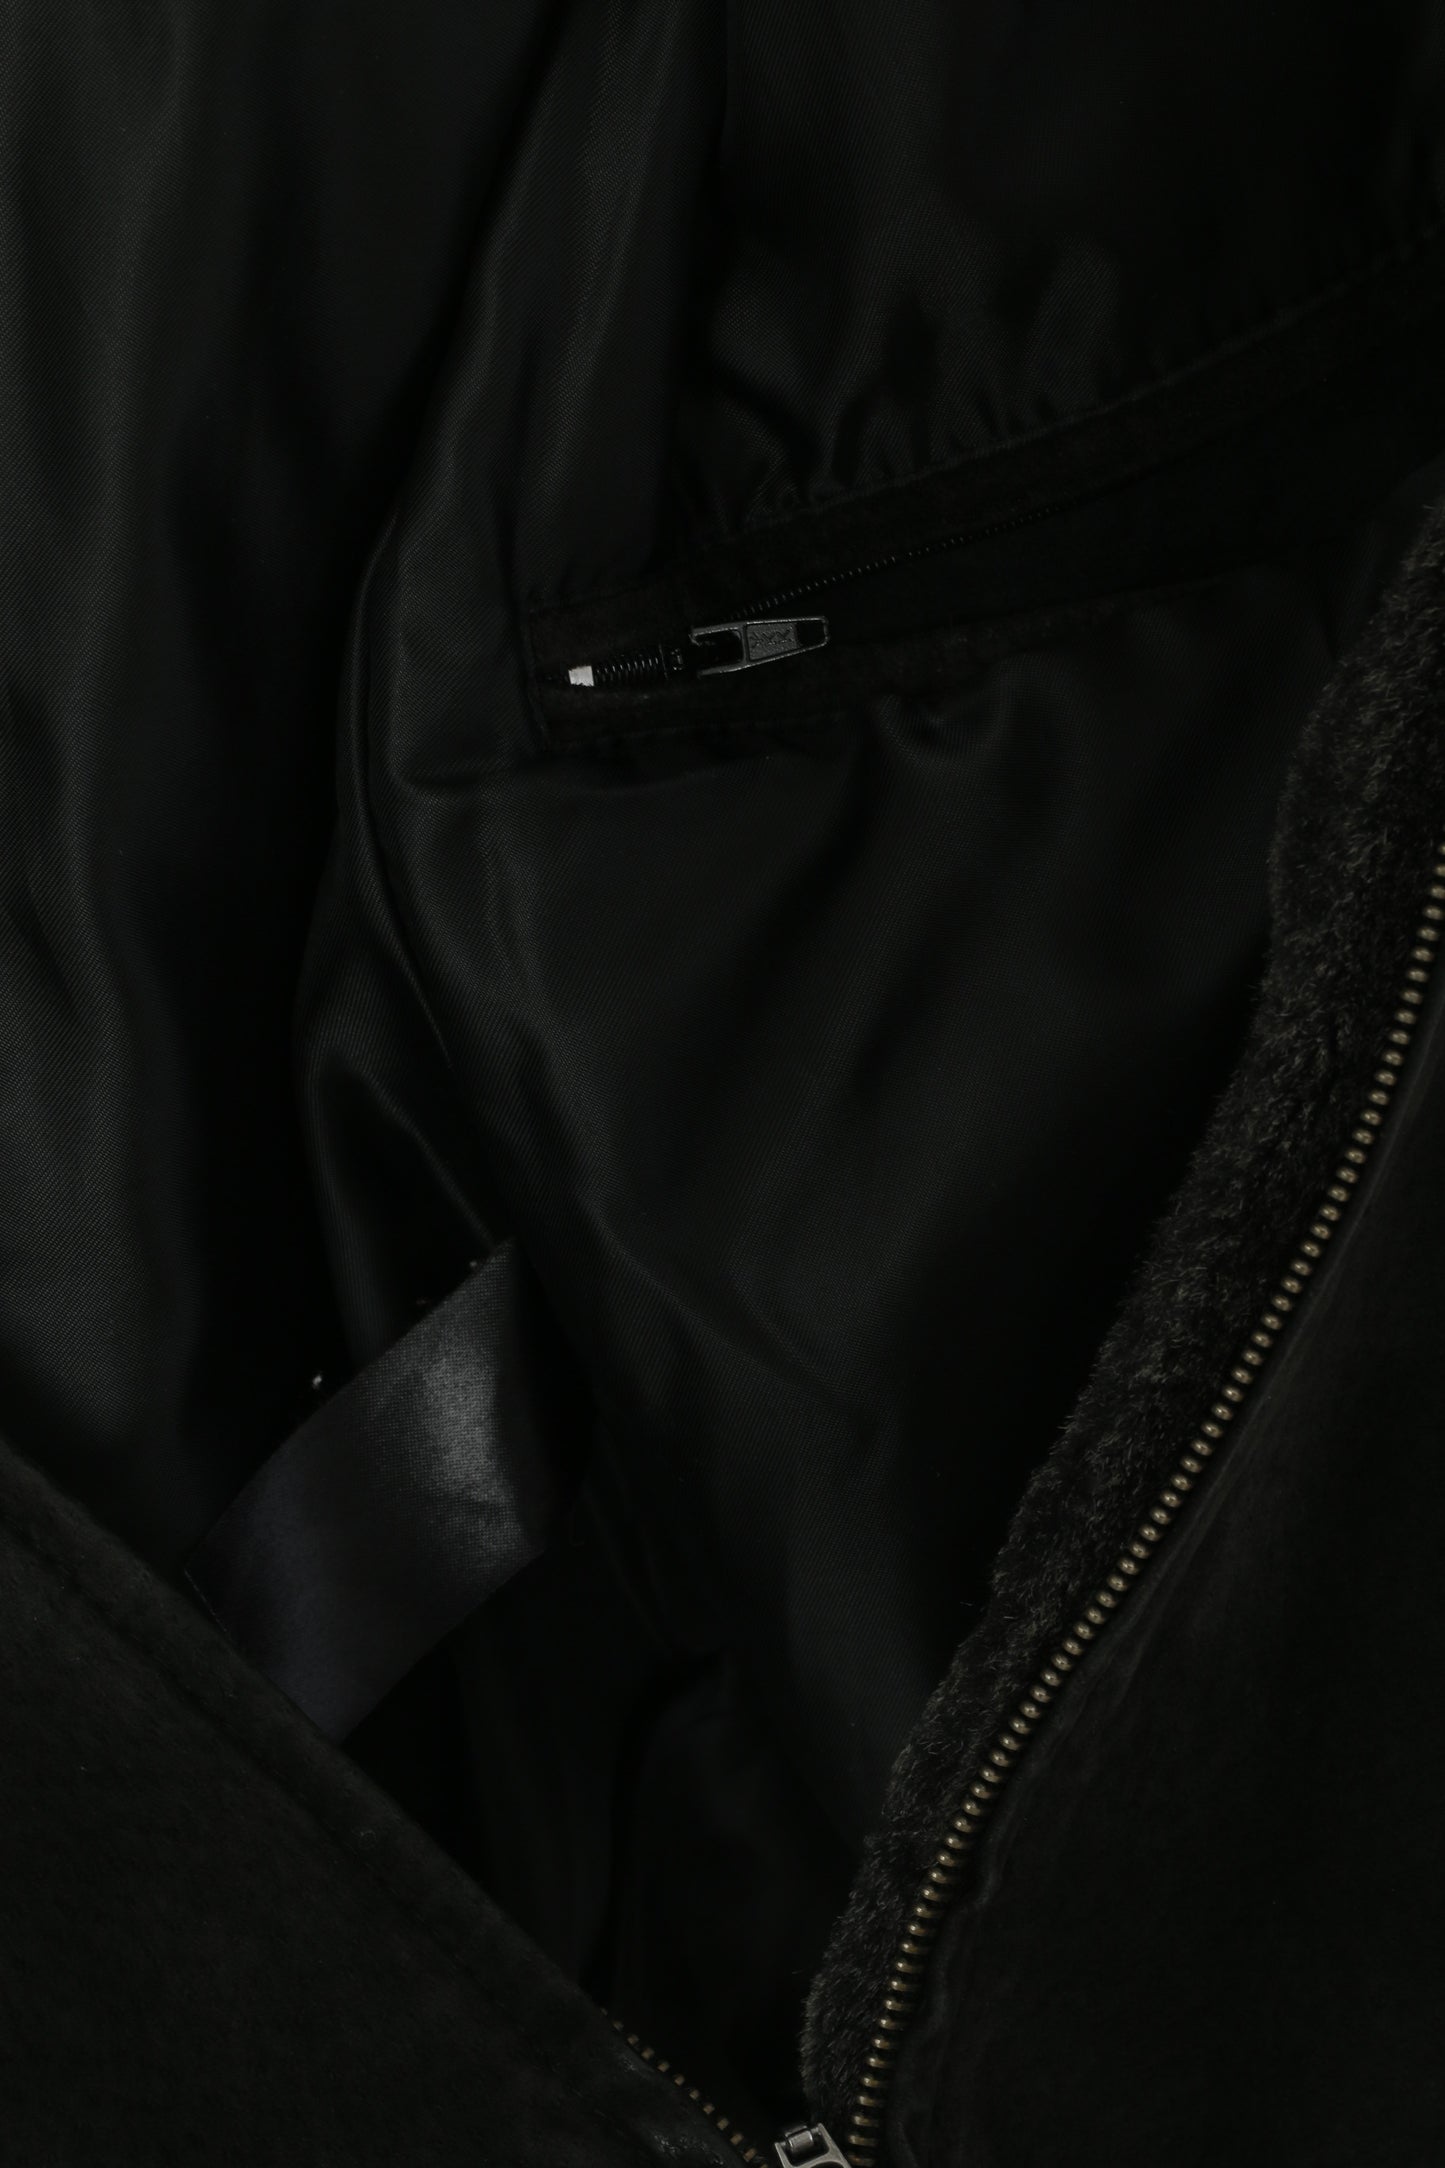 Joy Women 42 M Jacket Charcoal Leather Suede Full Zipper Fur Collar Top